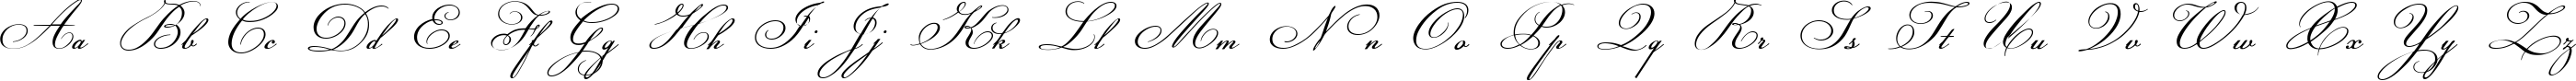 Пример написания английского алфавита шрифтом Champignon